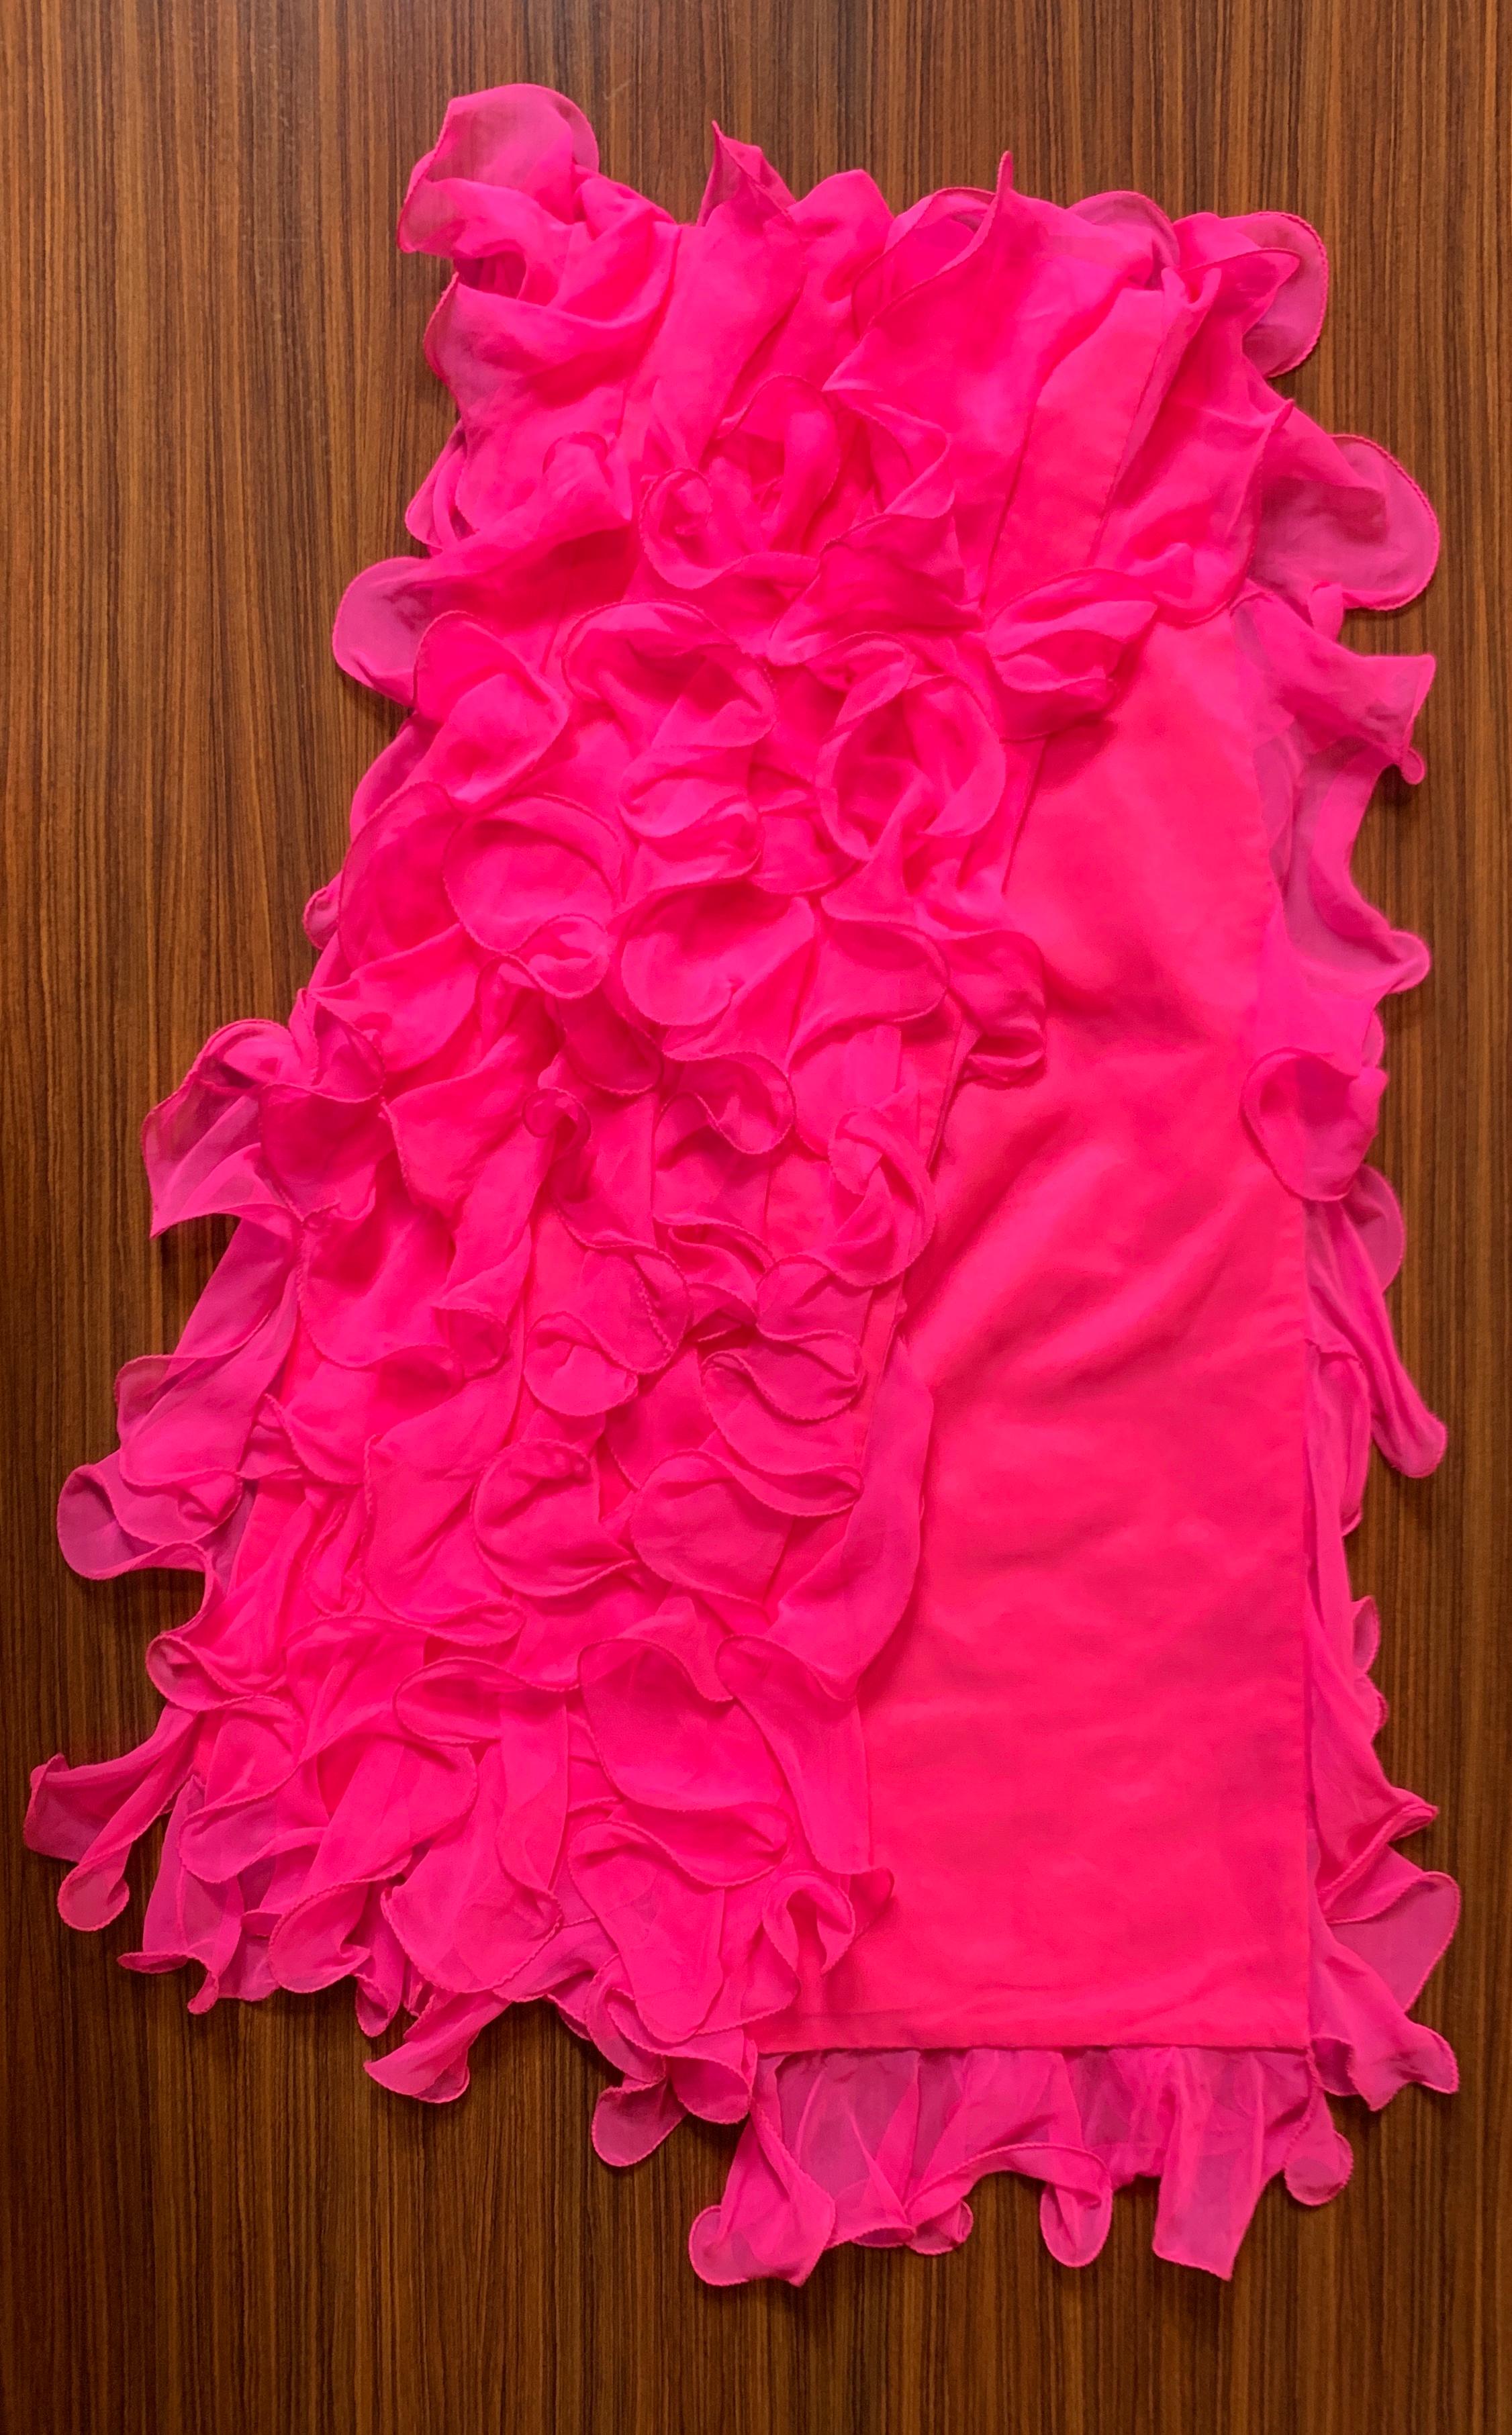 Women's Stephen Yearick 1990s Bright Pink Ruffle Scarf and Strapless Dress